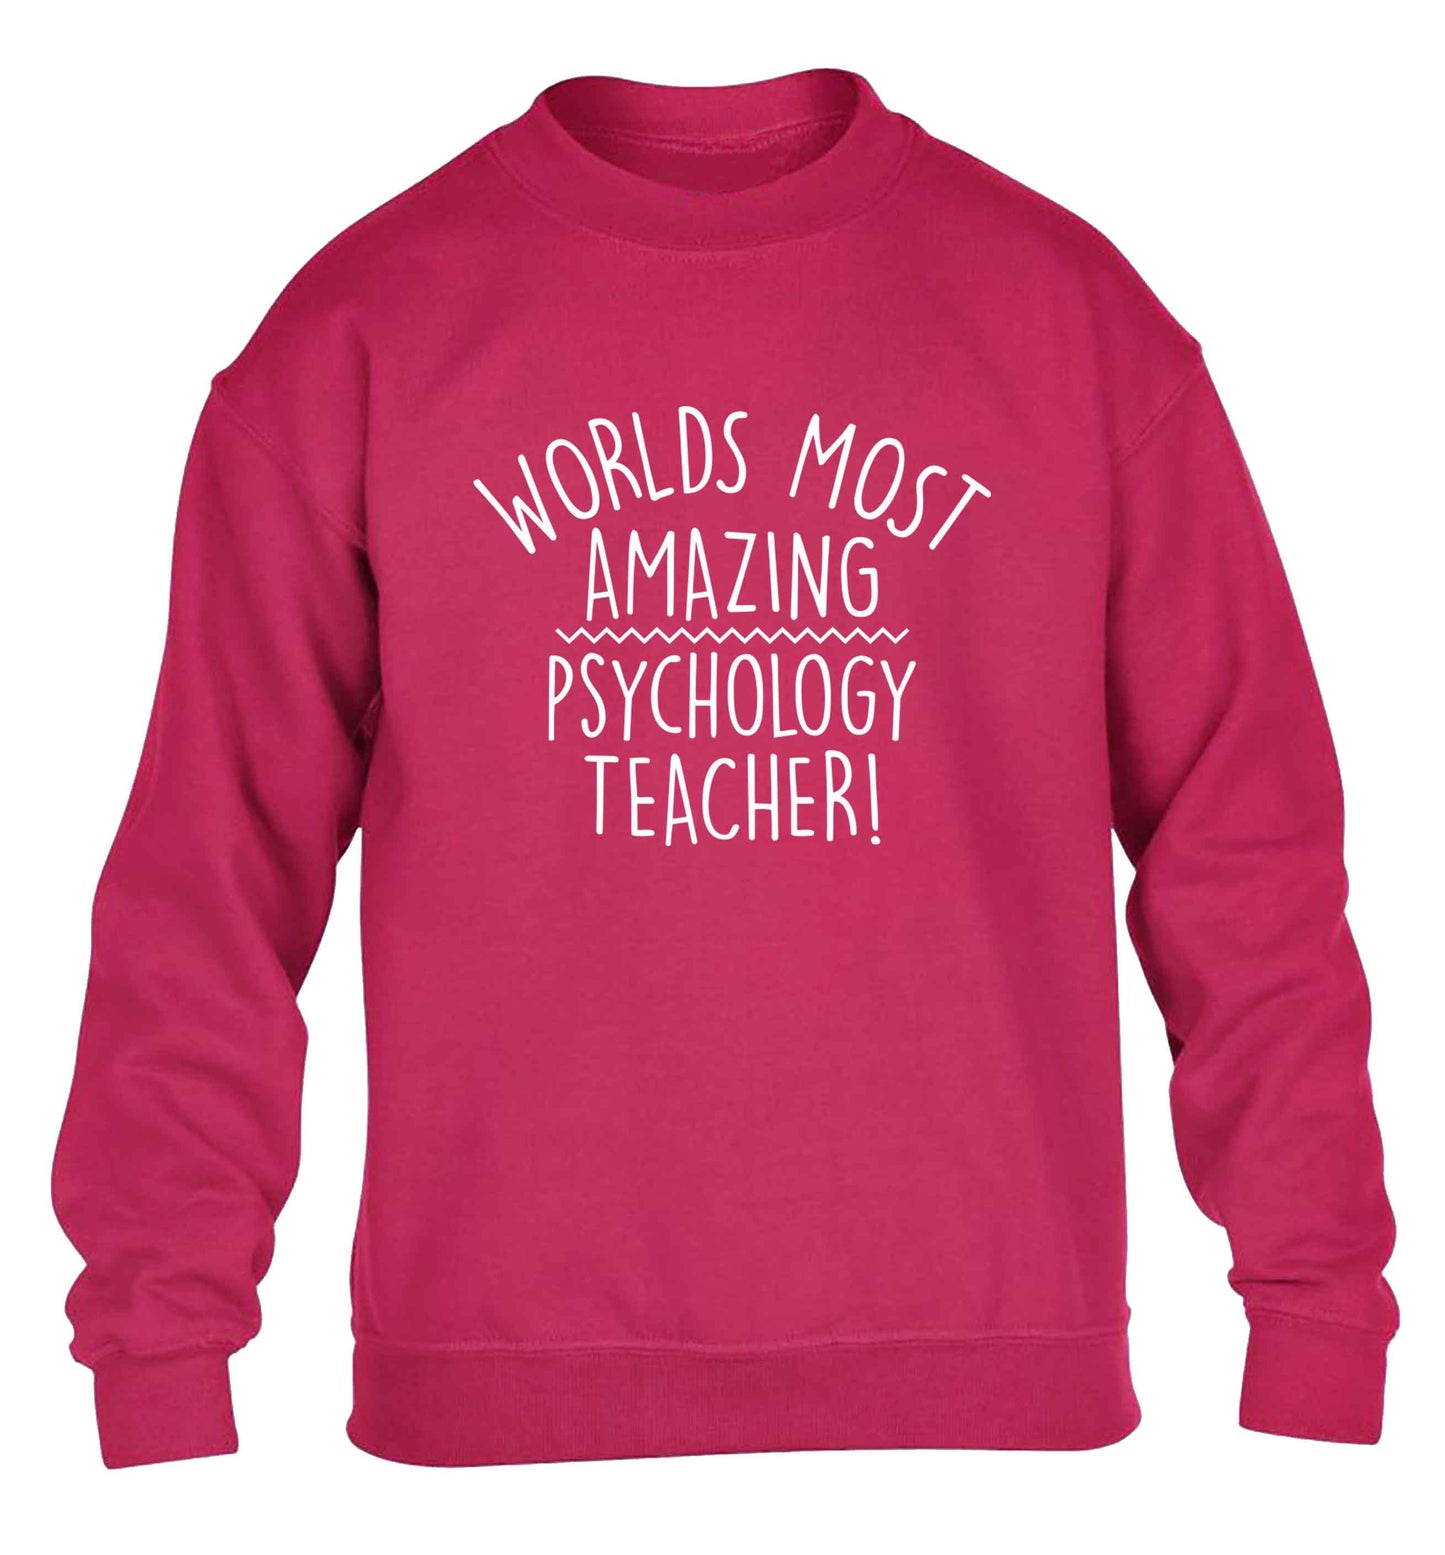 Worlds most amazing psychology teacher children's pink sweater 12-13 Years